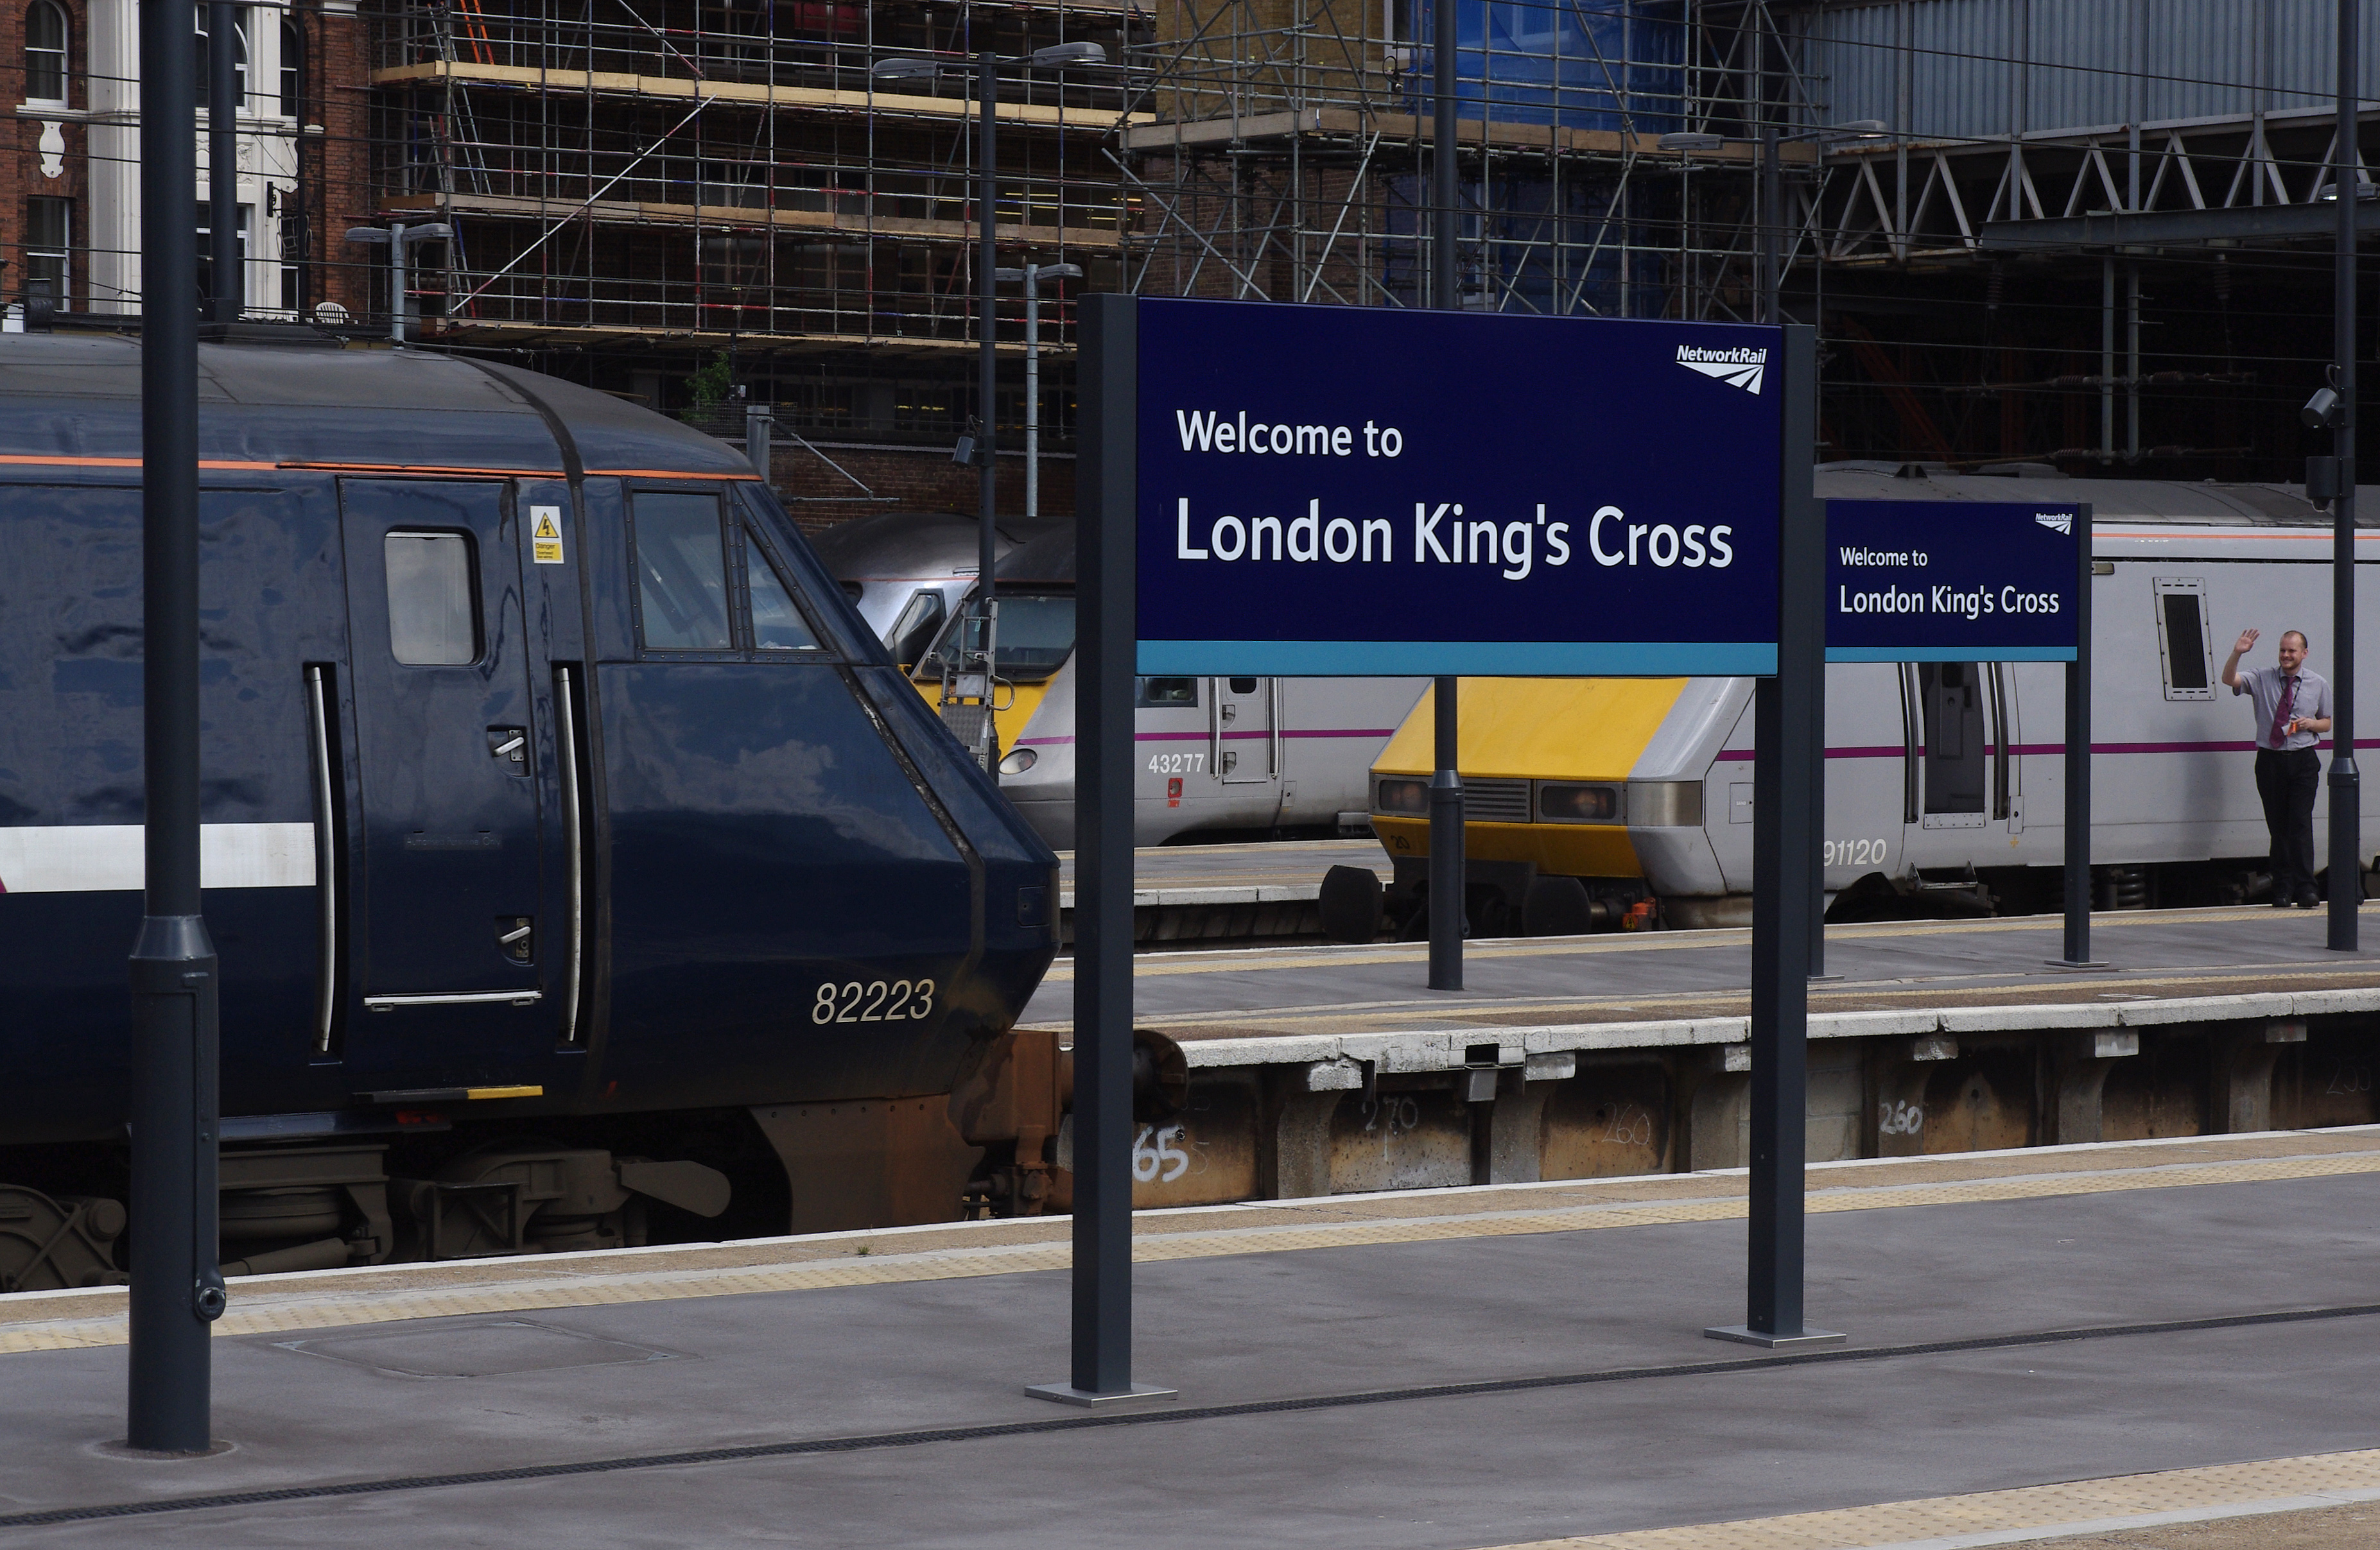 King's Cross railway station MMB 81 43277 91120